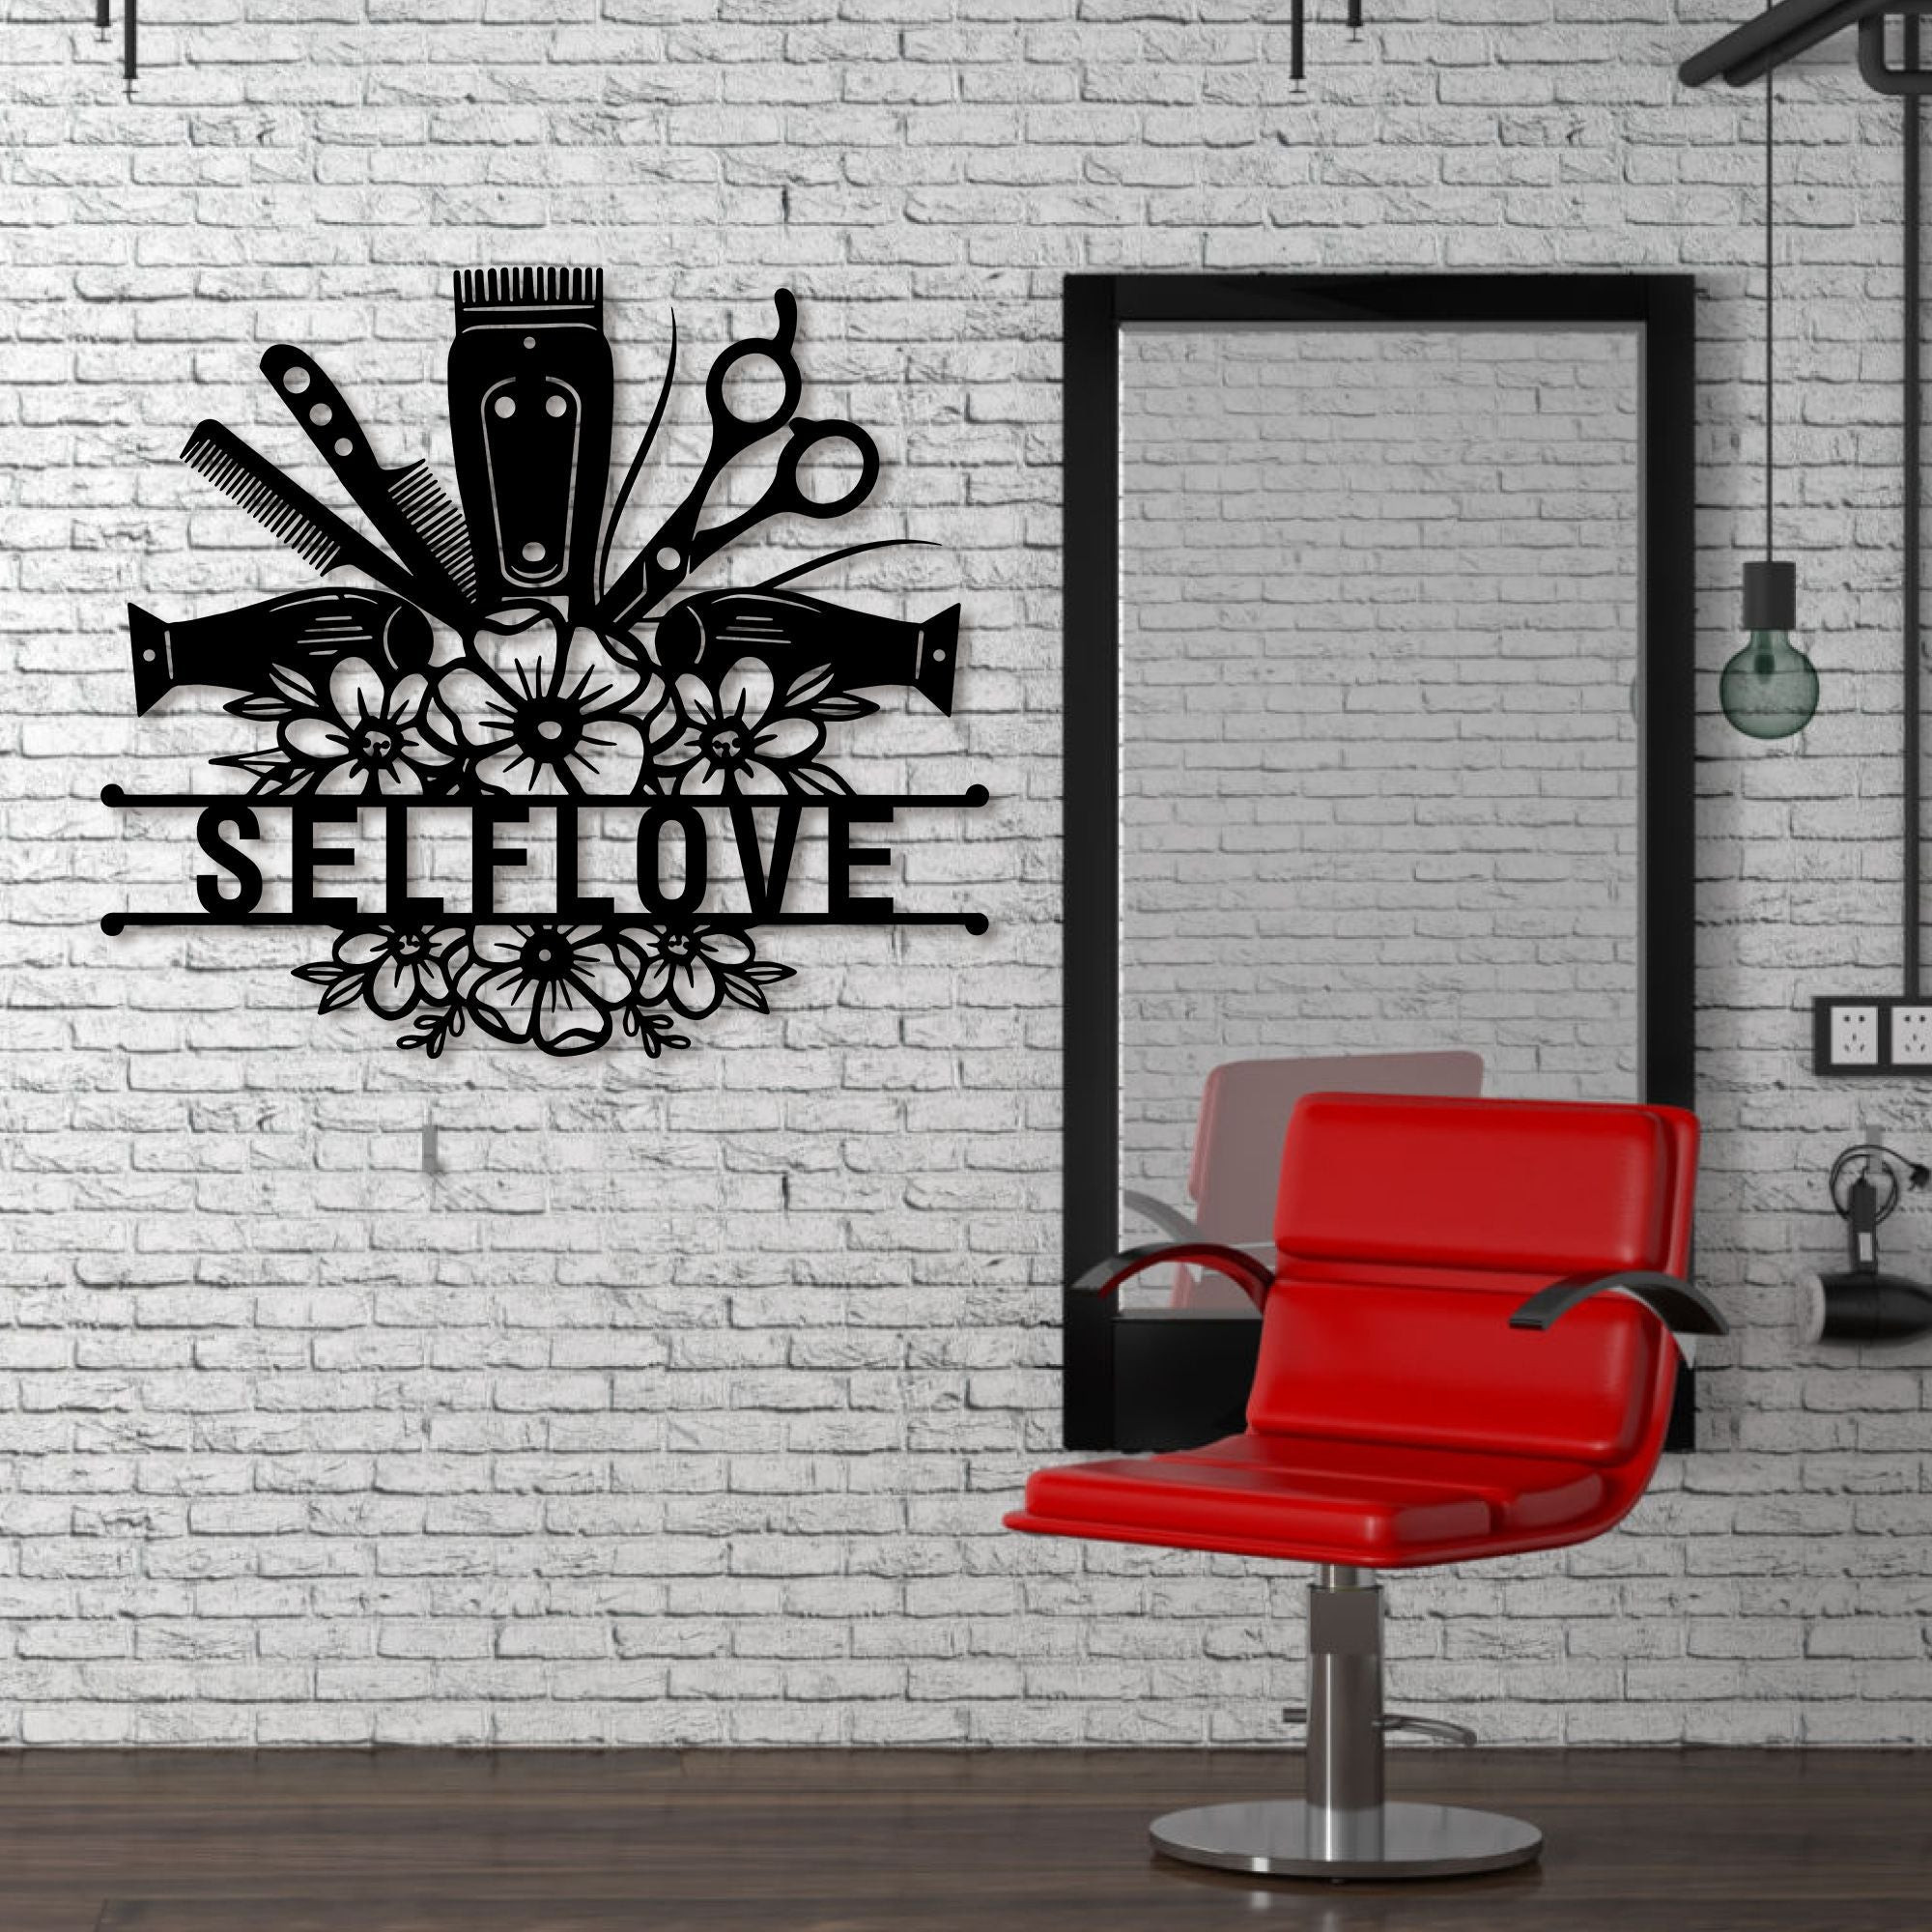 Personalized Hair Salon Metal Wall Art, Cut Metal Sign, Metal Wall Art, Metal House Sign, Metal Laser Cut Metal Signs Custom Gift Ideas 14x14IN